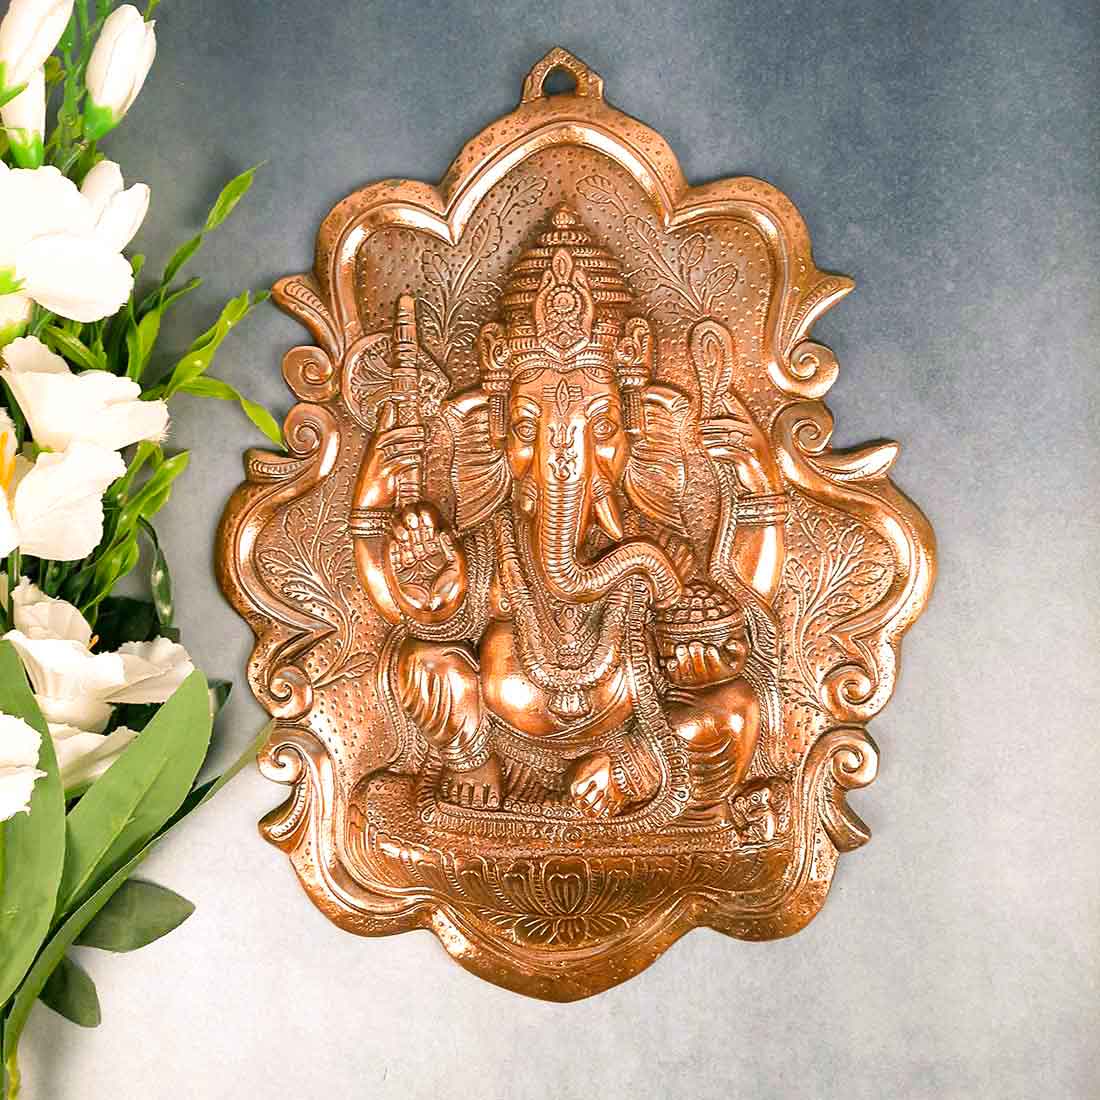 Ganesh Wall Hanging Statue | Ganesha Wall Idol for Puja, Home, Living Room Decor | Religious & Spiritual Wall Art | Diwali & Housewarming Gift - 16 Inch